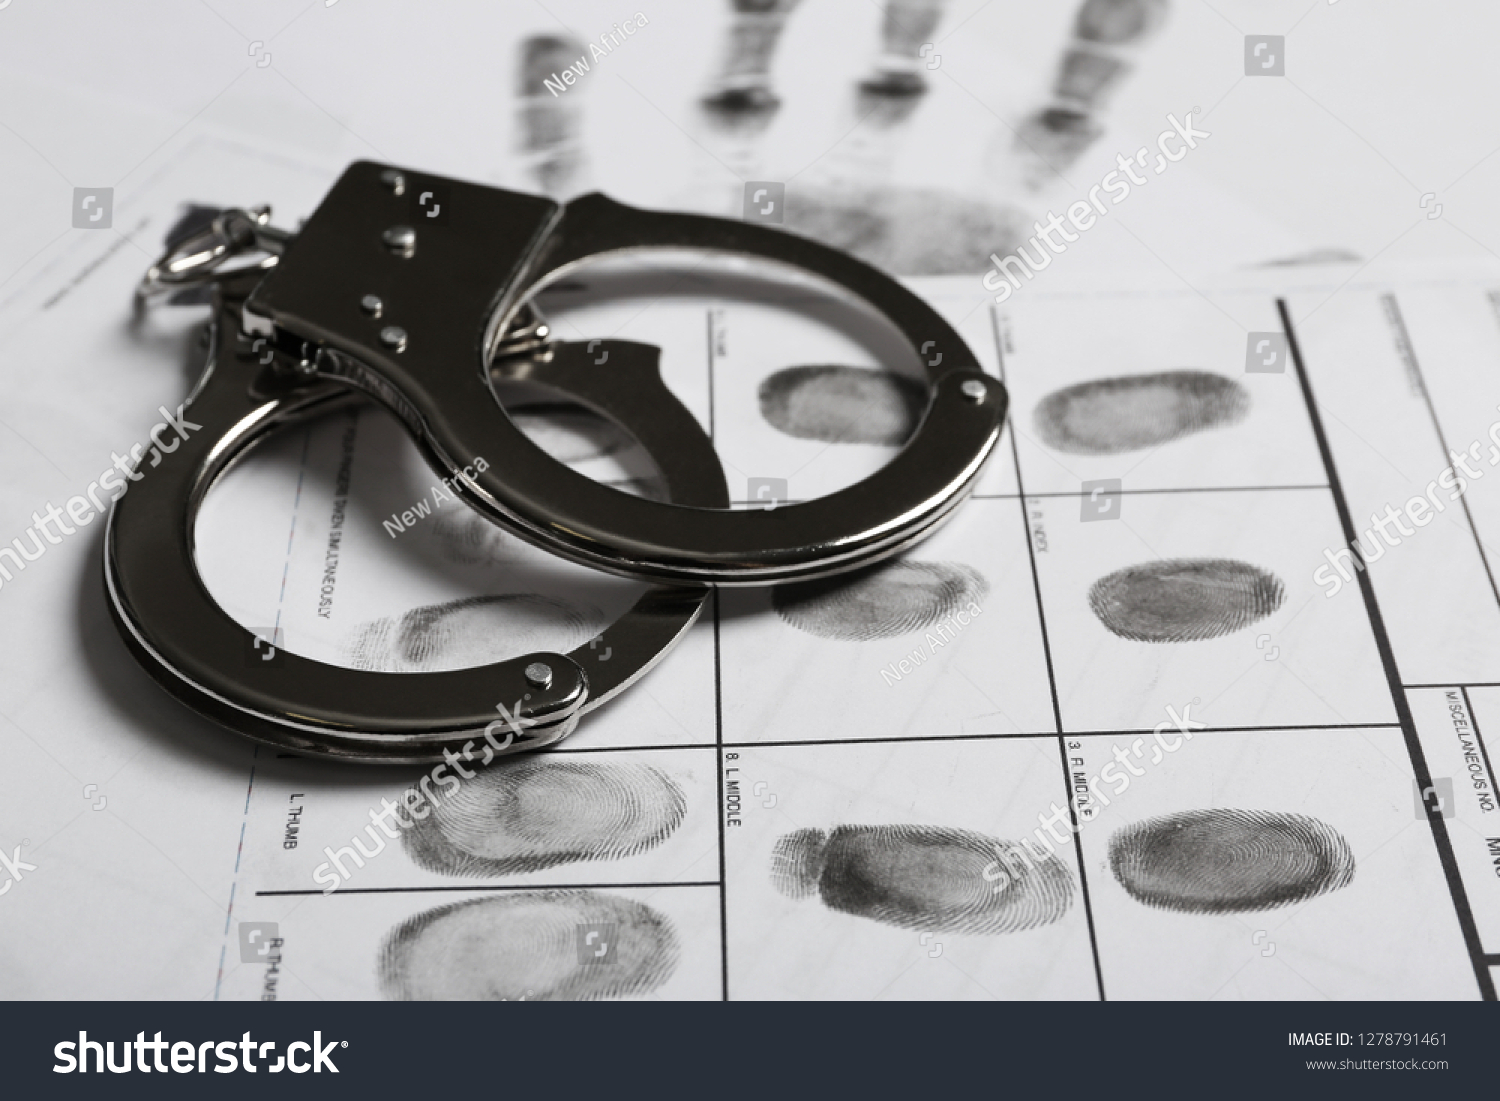 Police handcuffs and criminal fingerprints card, closeup #1278791461